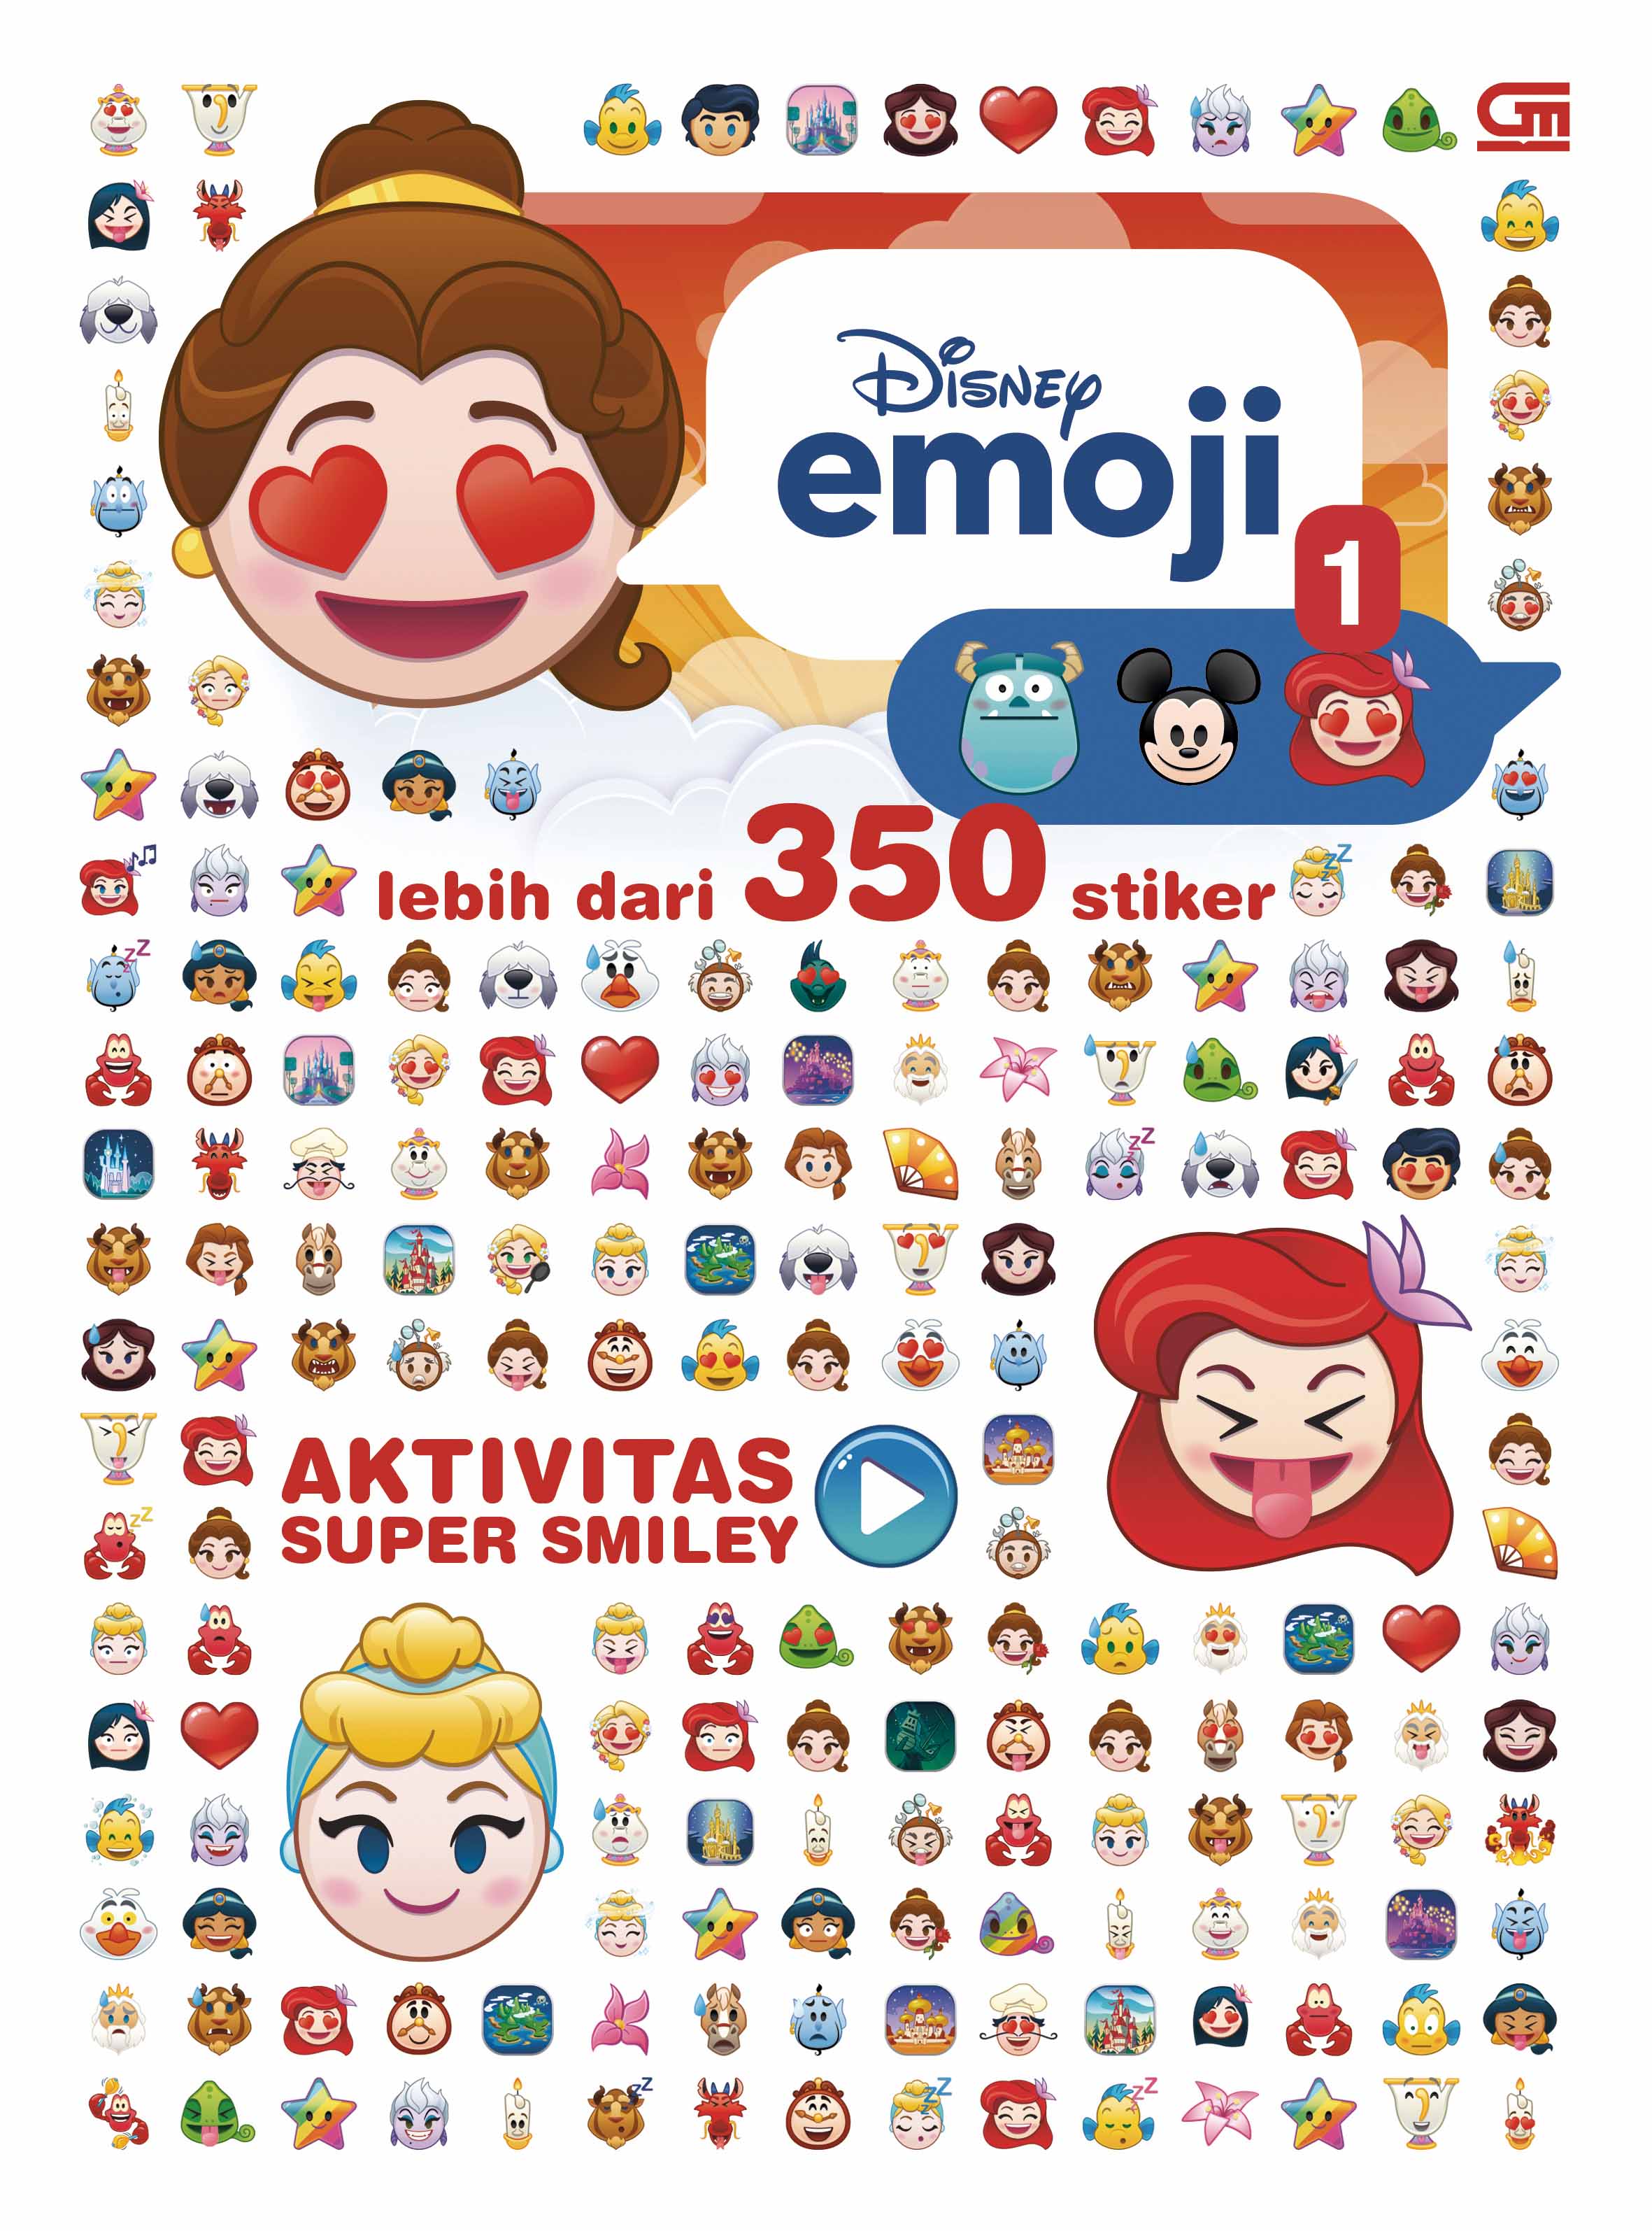 Disney Emoji 1: Aktivitas Super Smiley